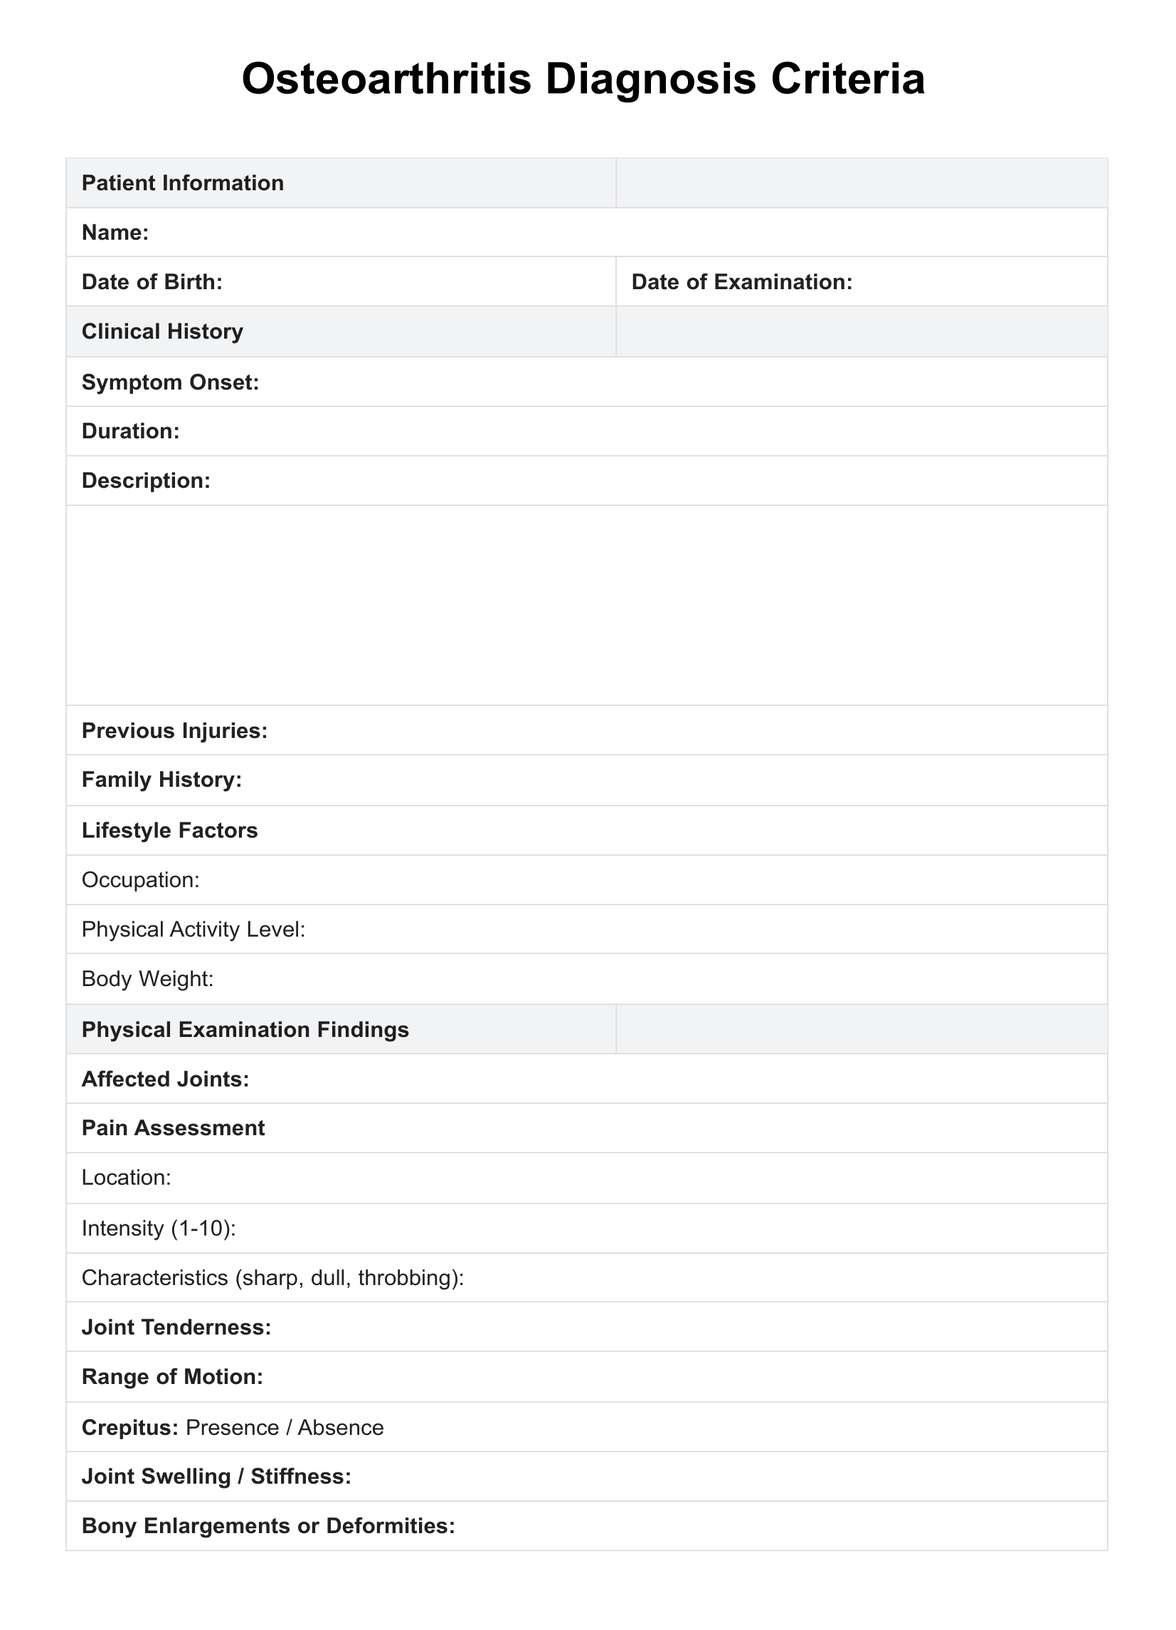 Osteoarthritis Diagnosis Criteria PDF Example